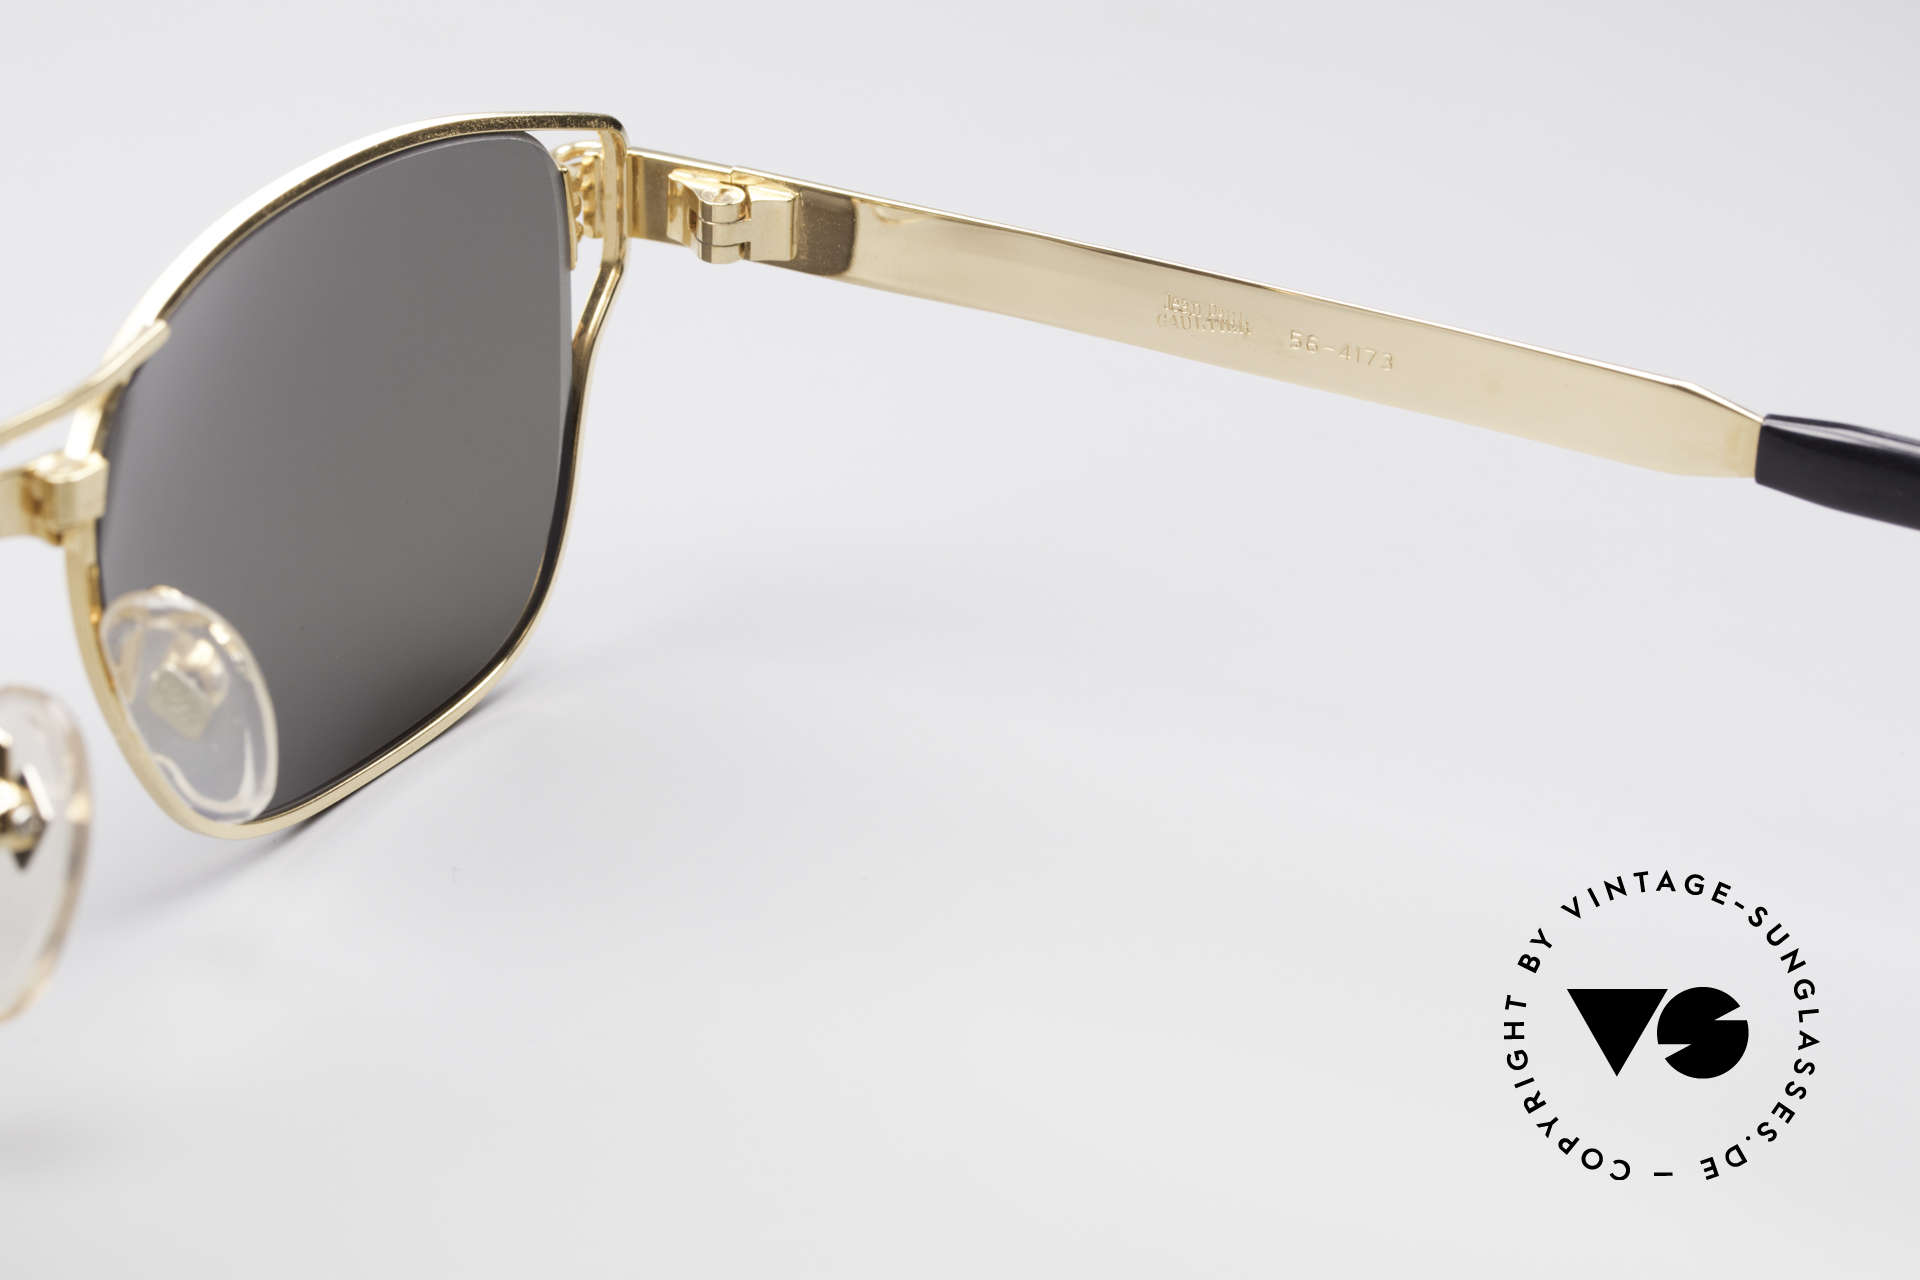 Jean Paul Gaultier 56-4173 Square Designer Sunglasses, Size: large, Made for Men